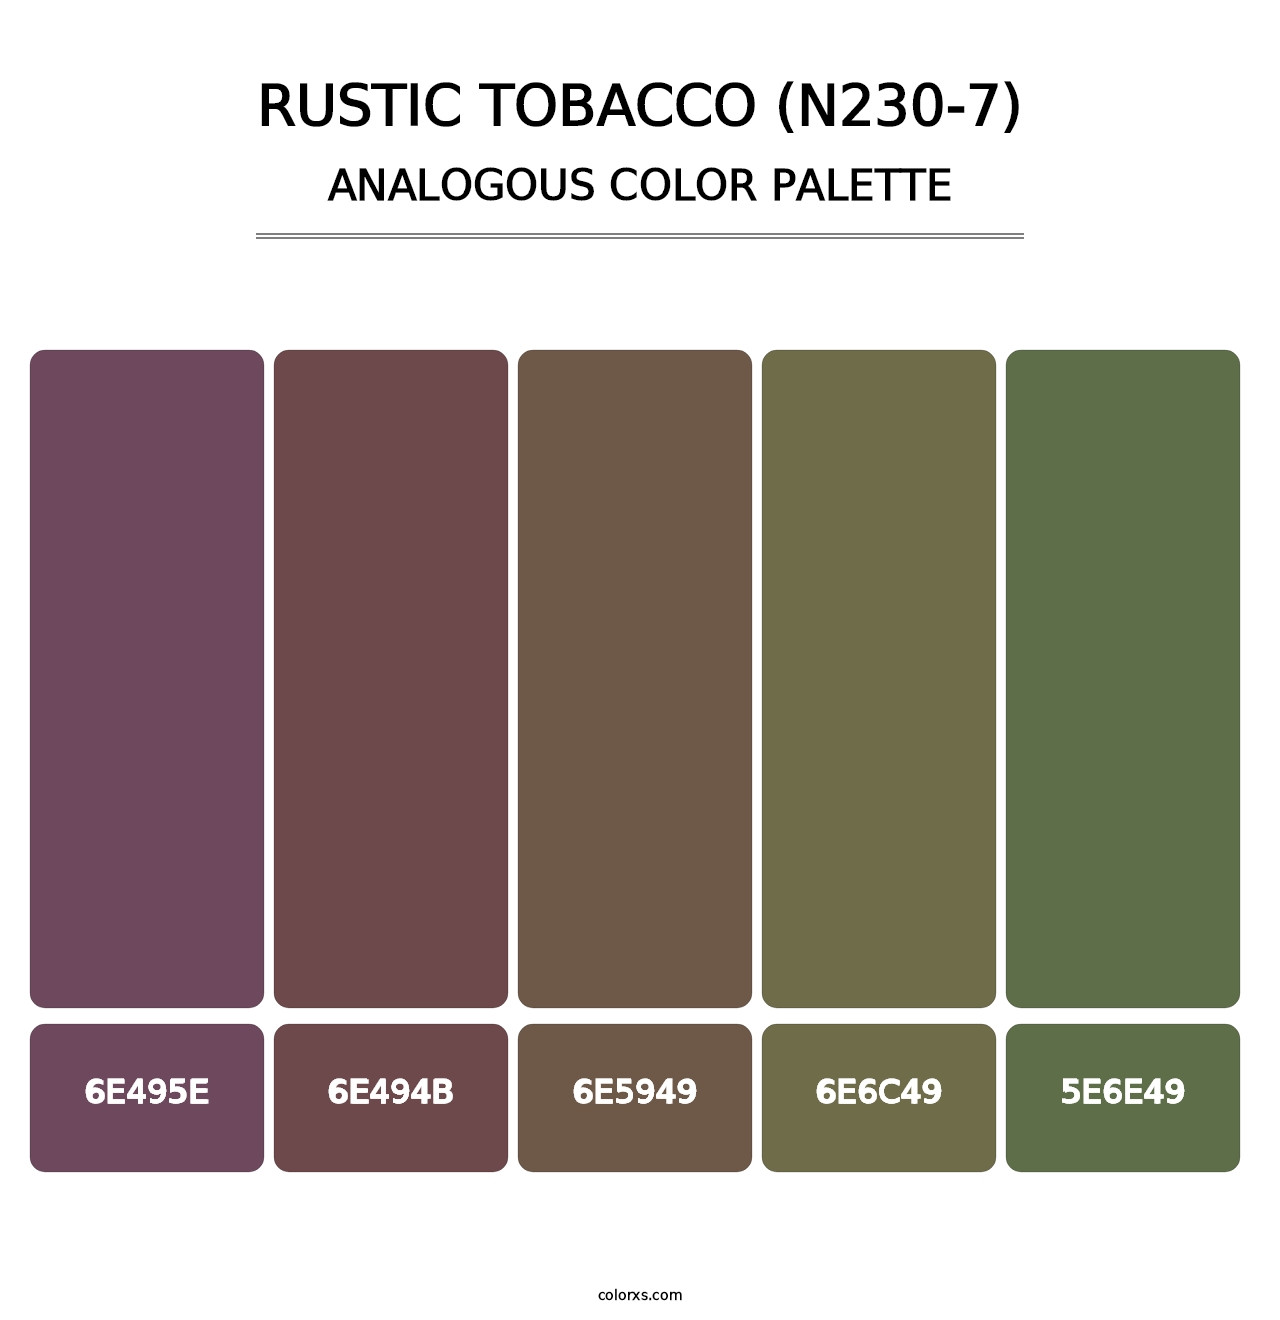 Rustic Tobacco (N230-7) - Analogous Color Palette